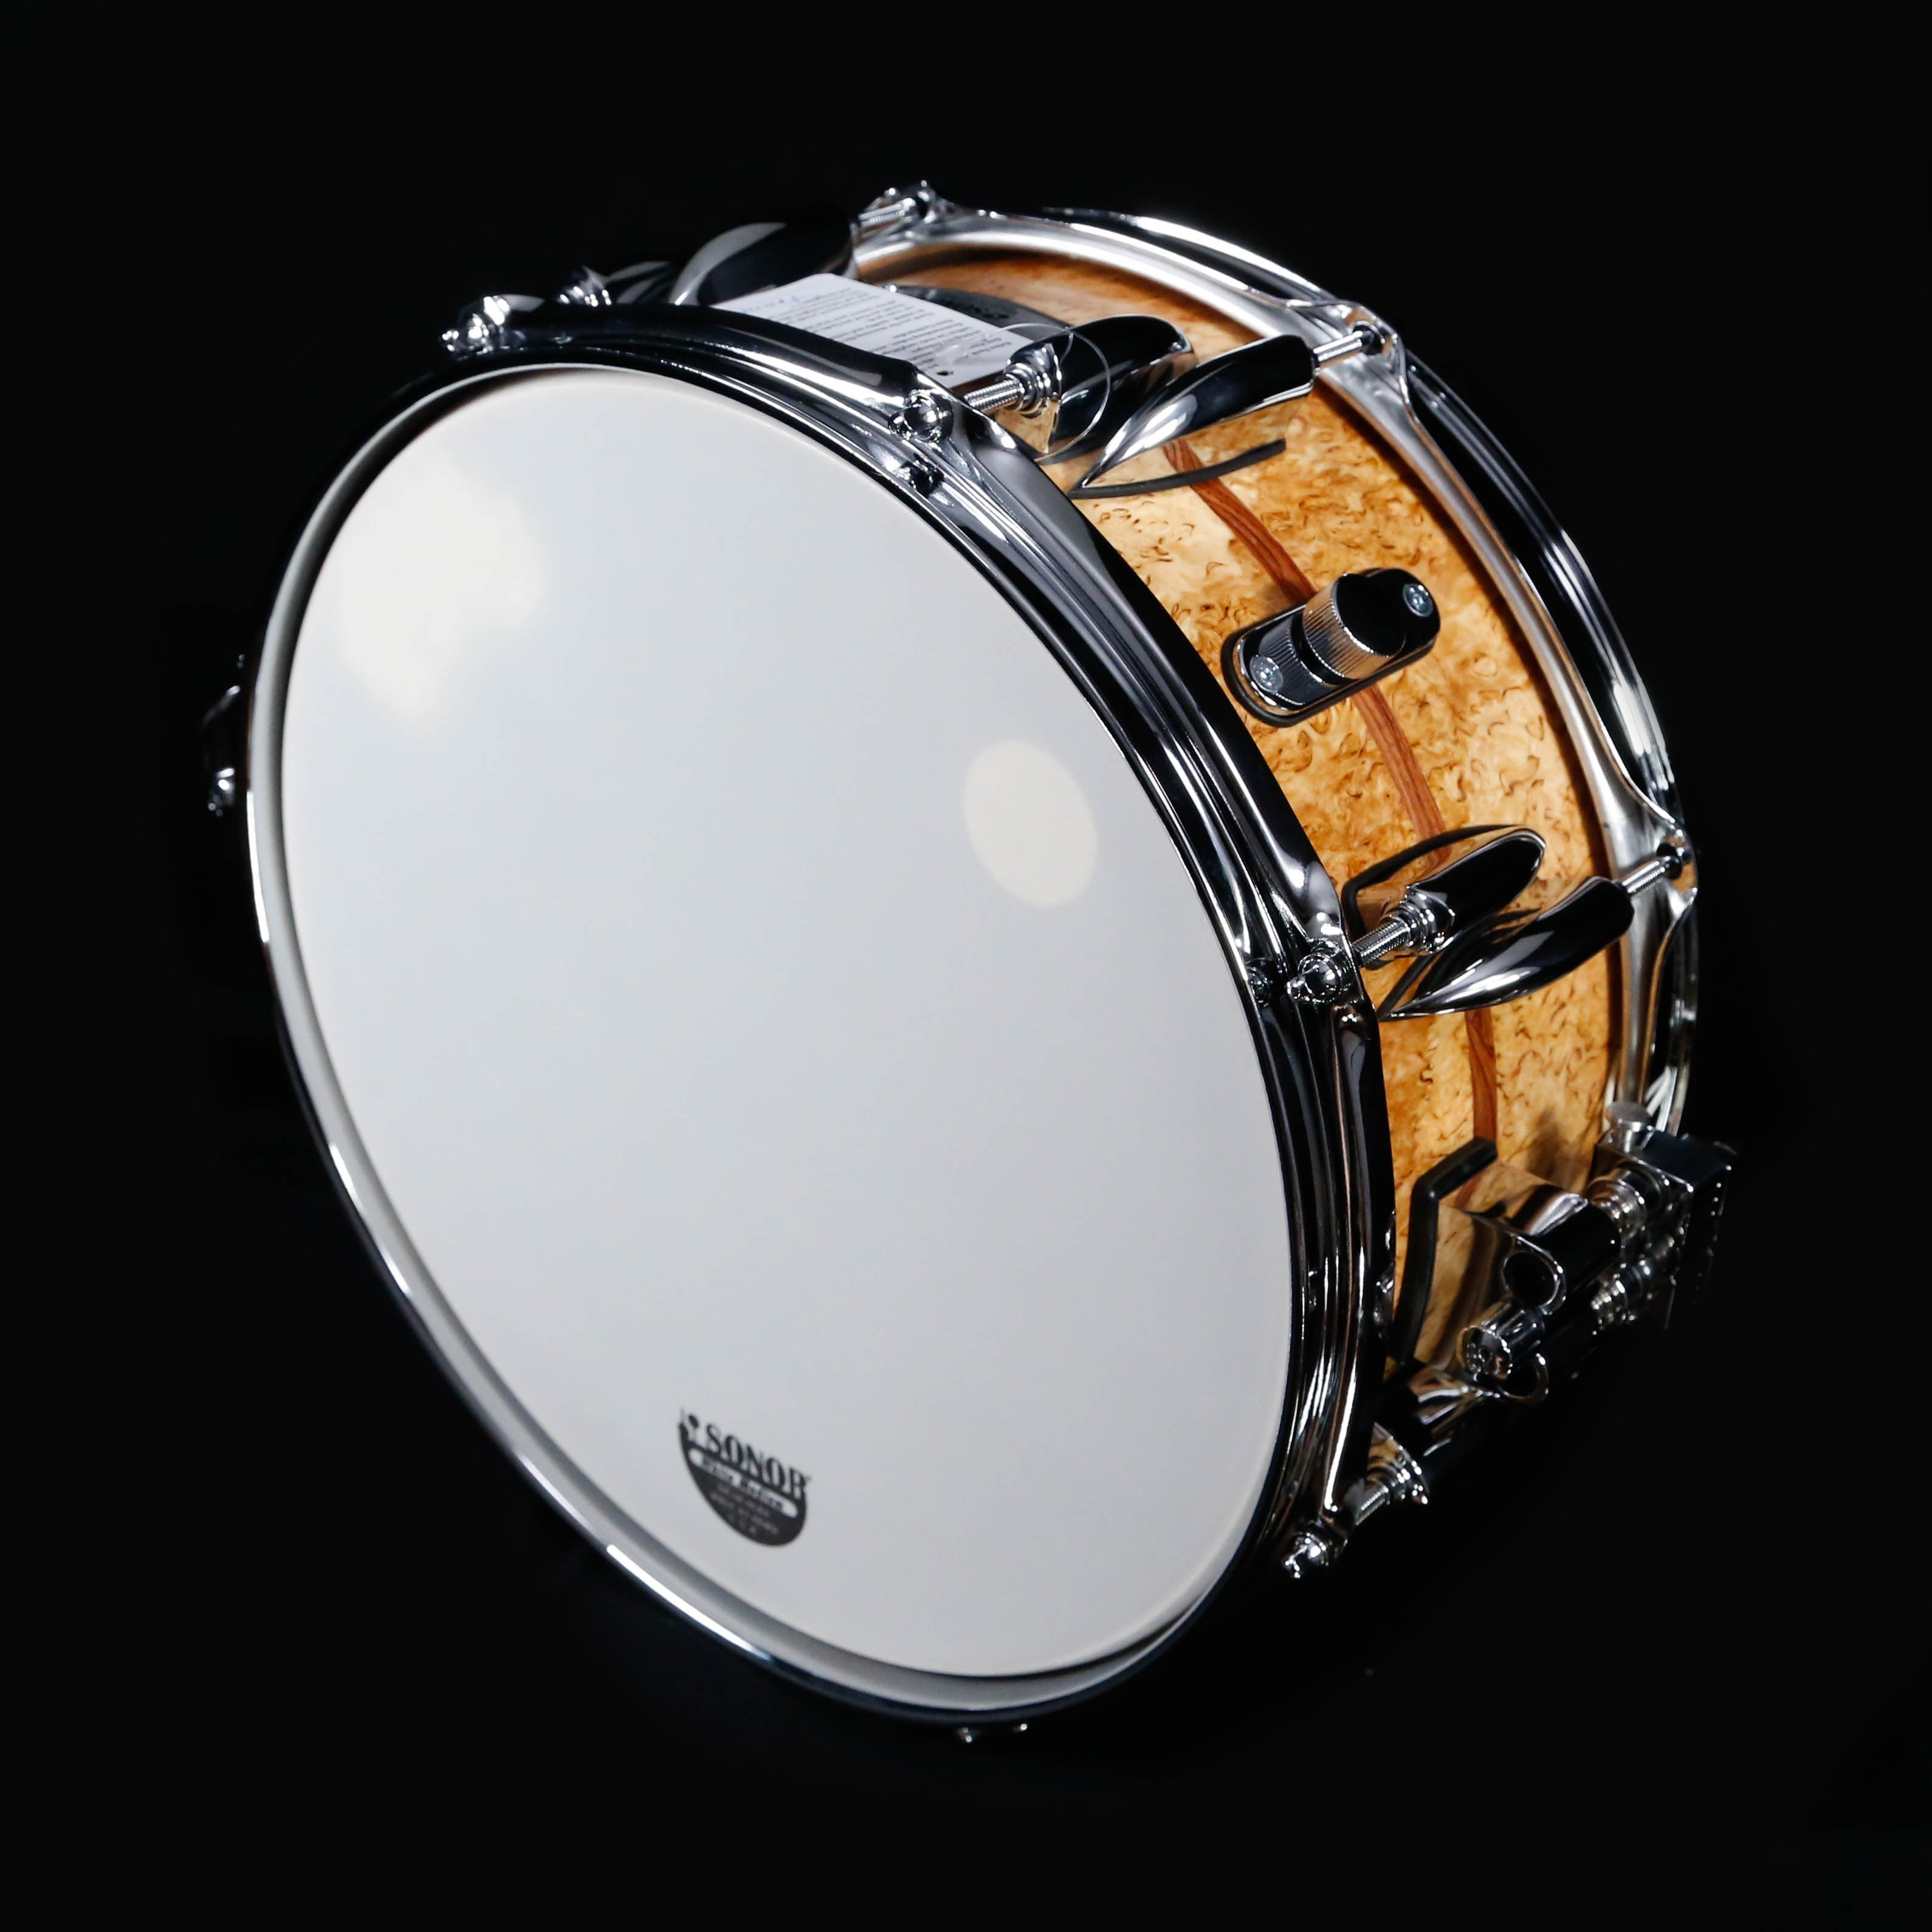 Sonor Benny Greb Signature Beech Snare Drum, 13x5.75''